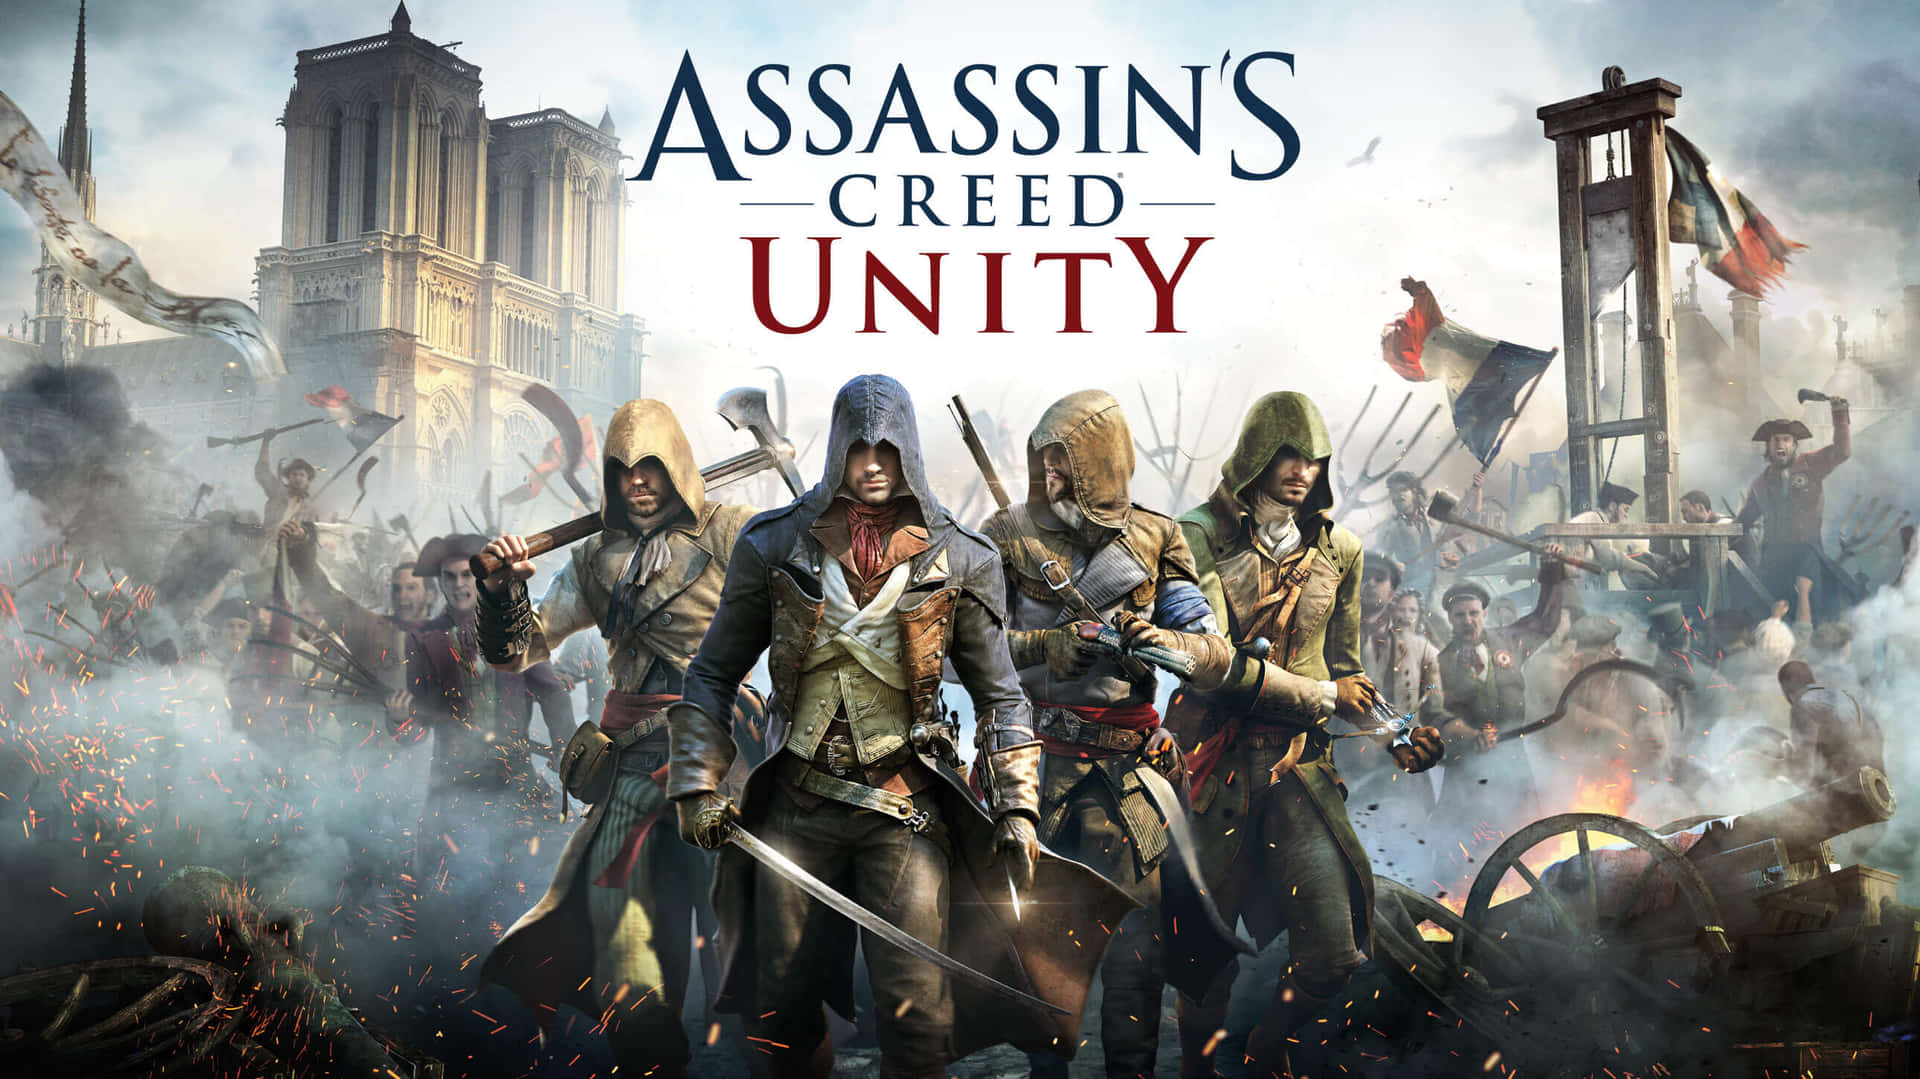 assassin's creed unity green character - Google Search  Assassin's creed  wallpaper, Assassin's creed, Assassins creed